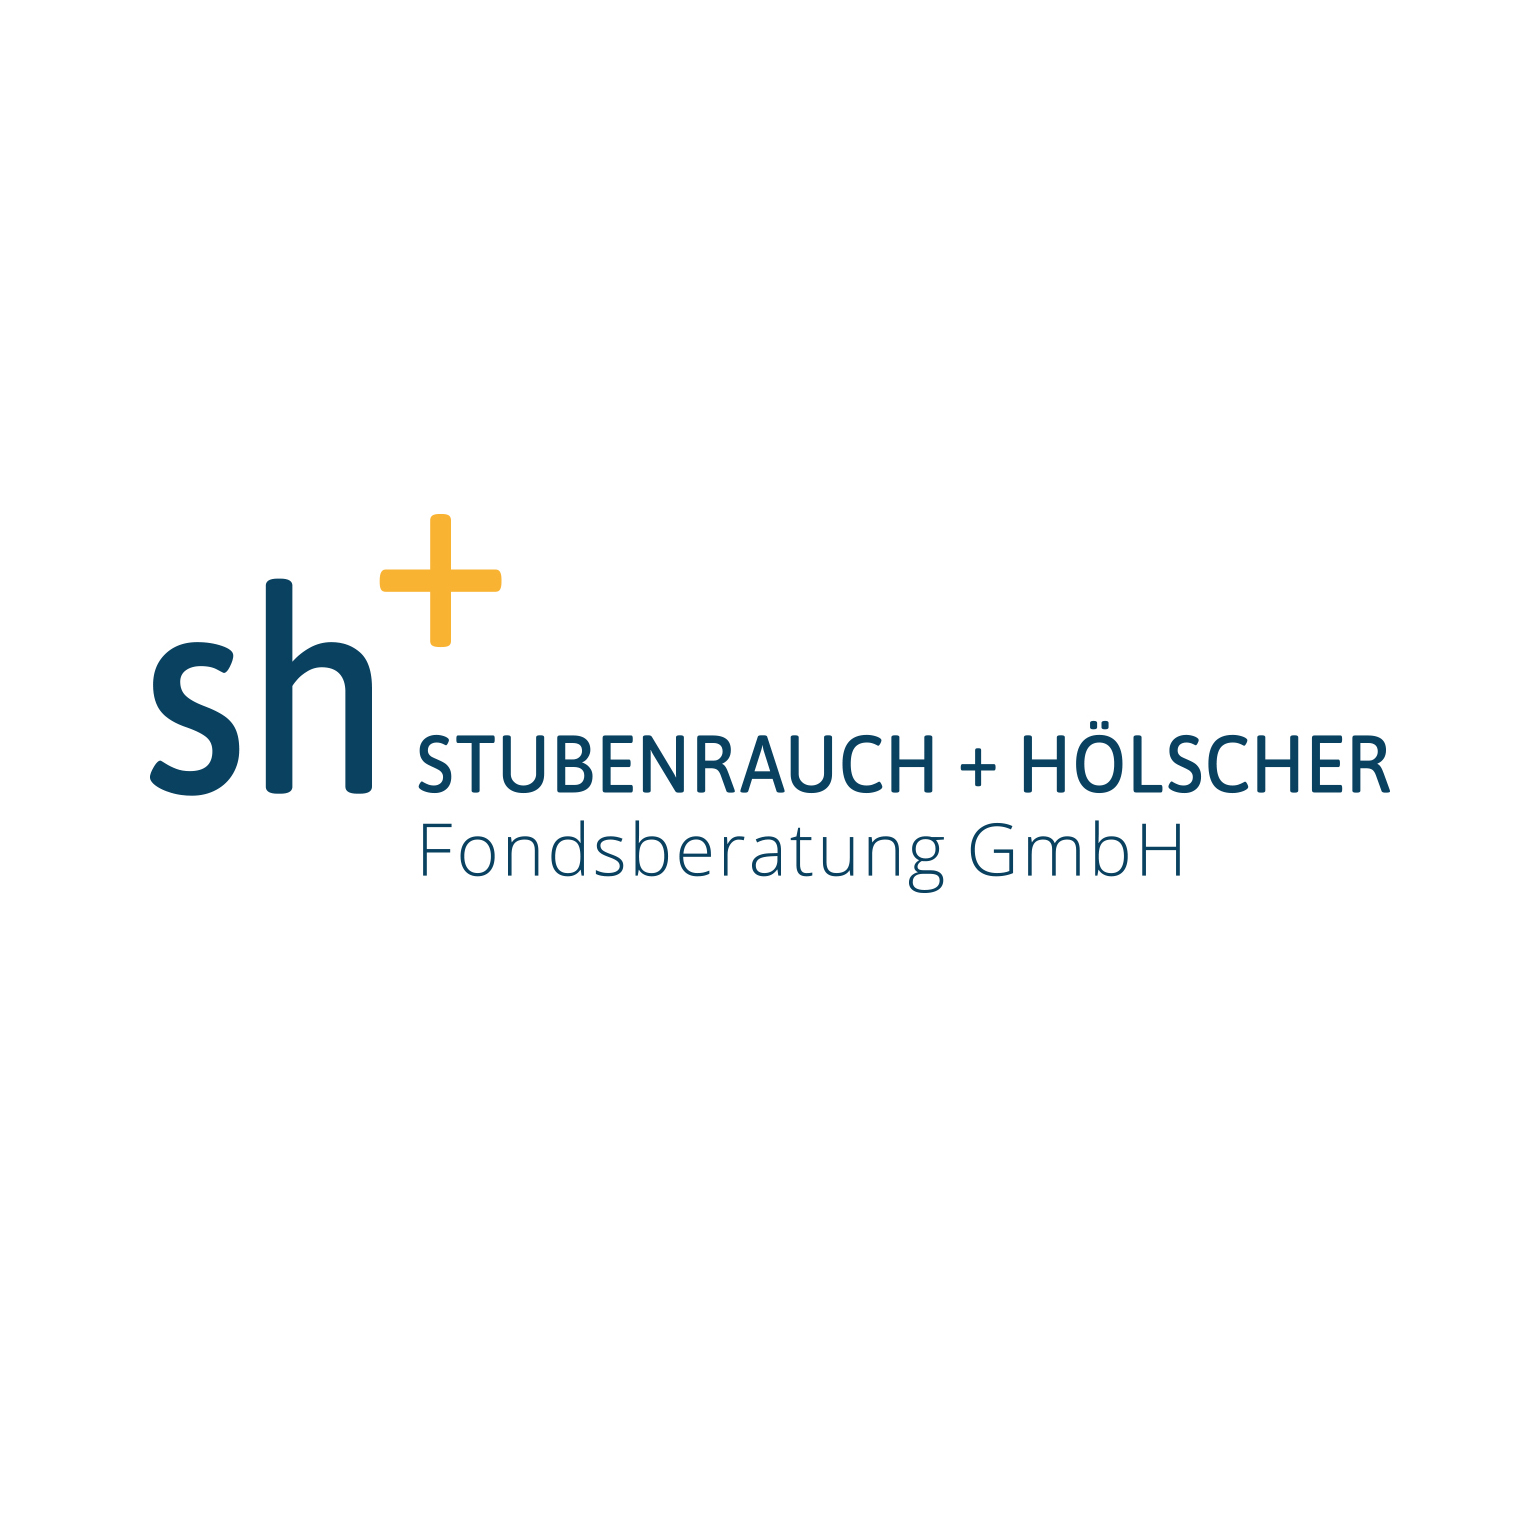 Stubenrauch + Hölscher Fondsberatung GmbH